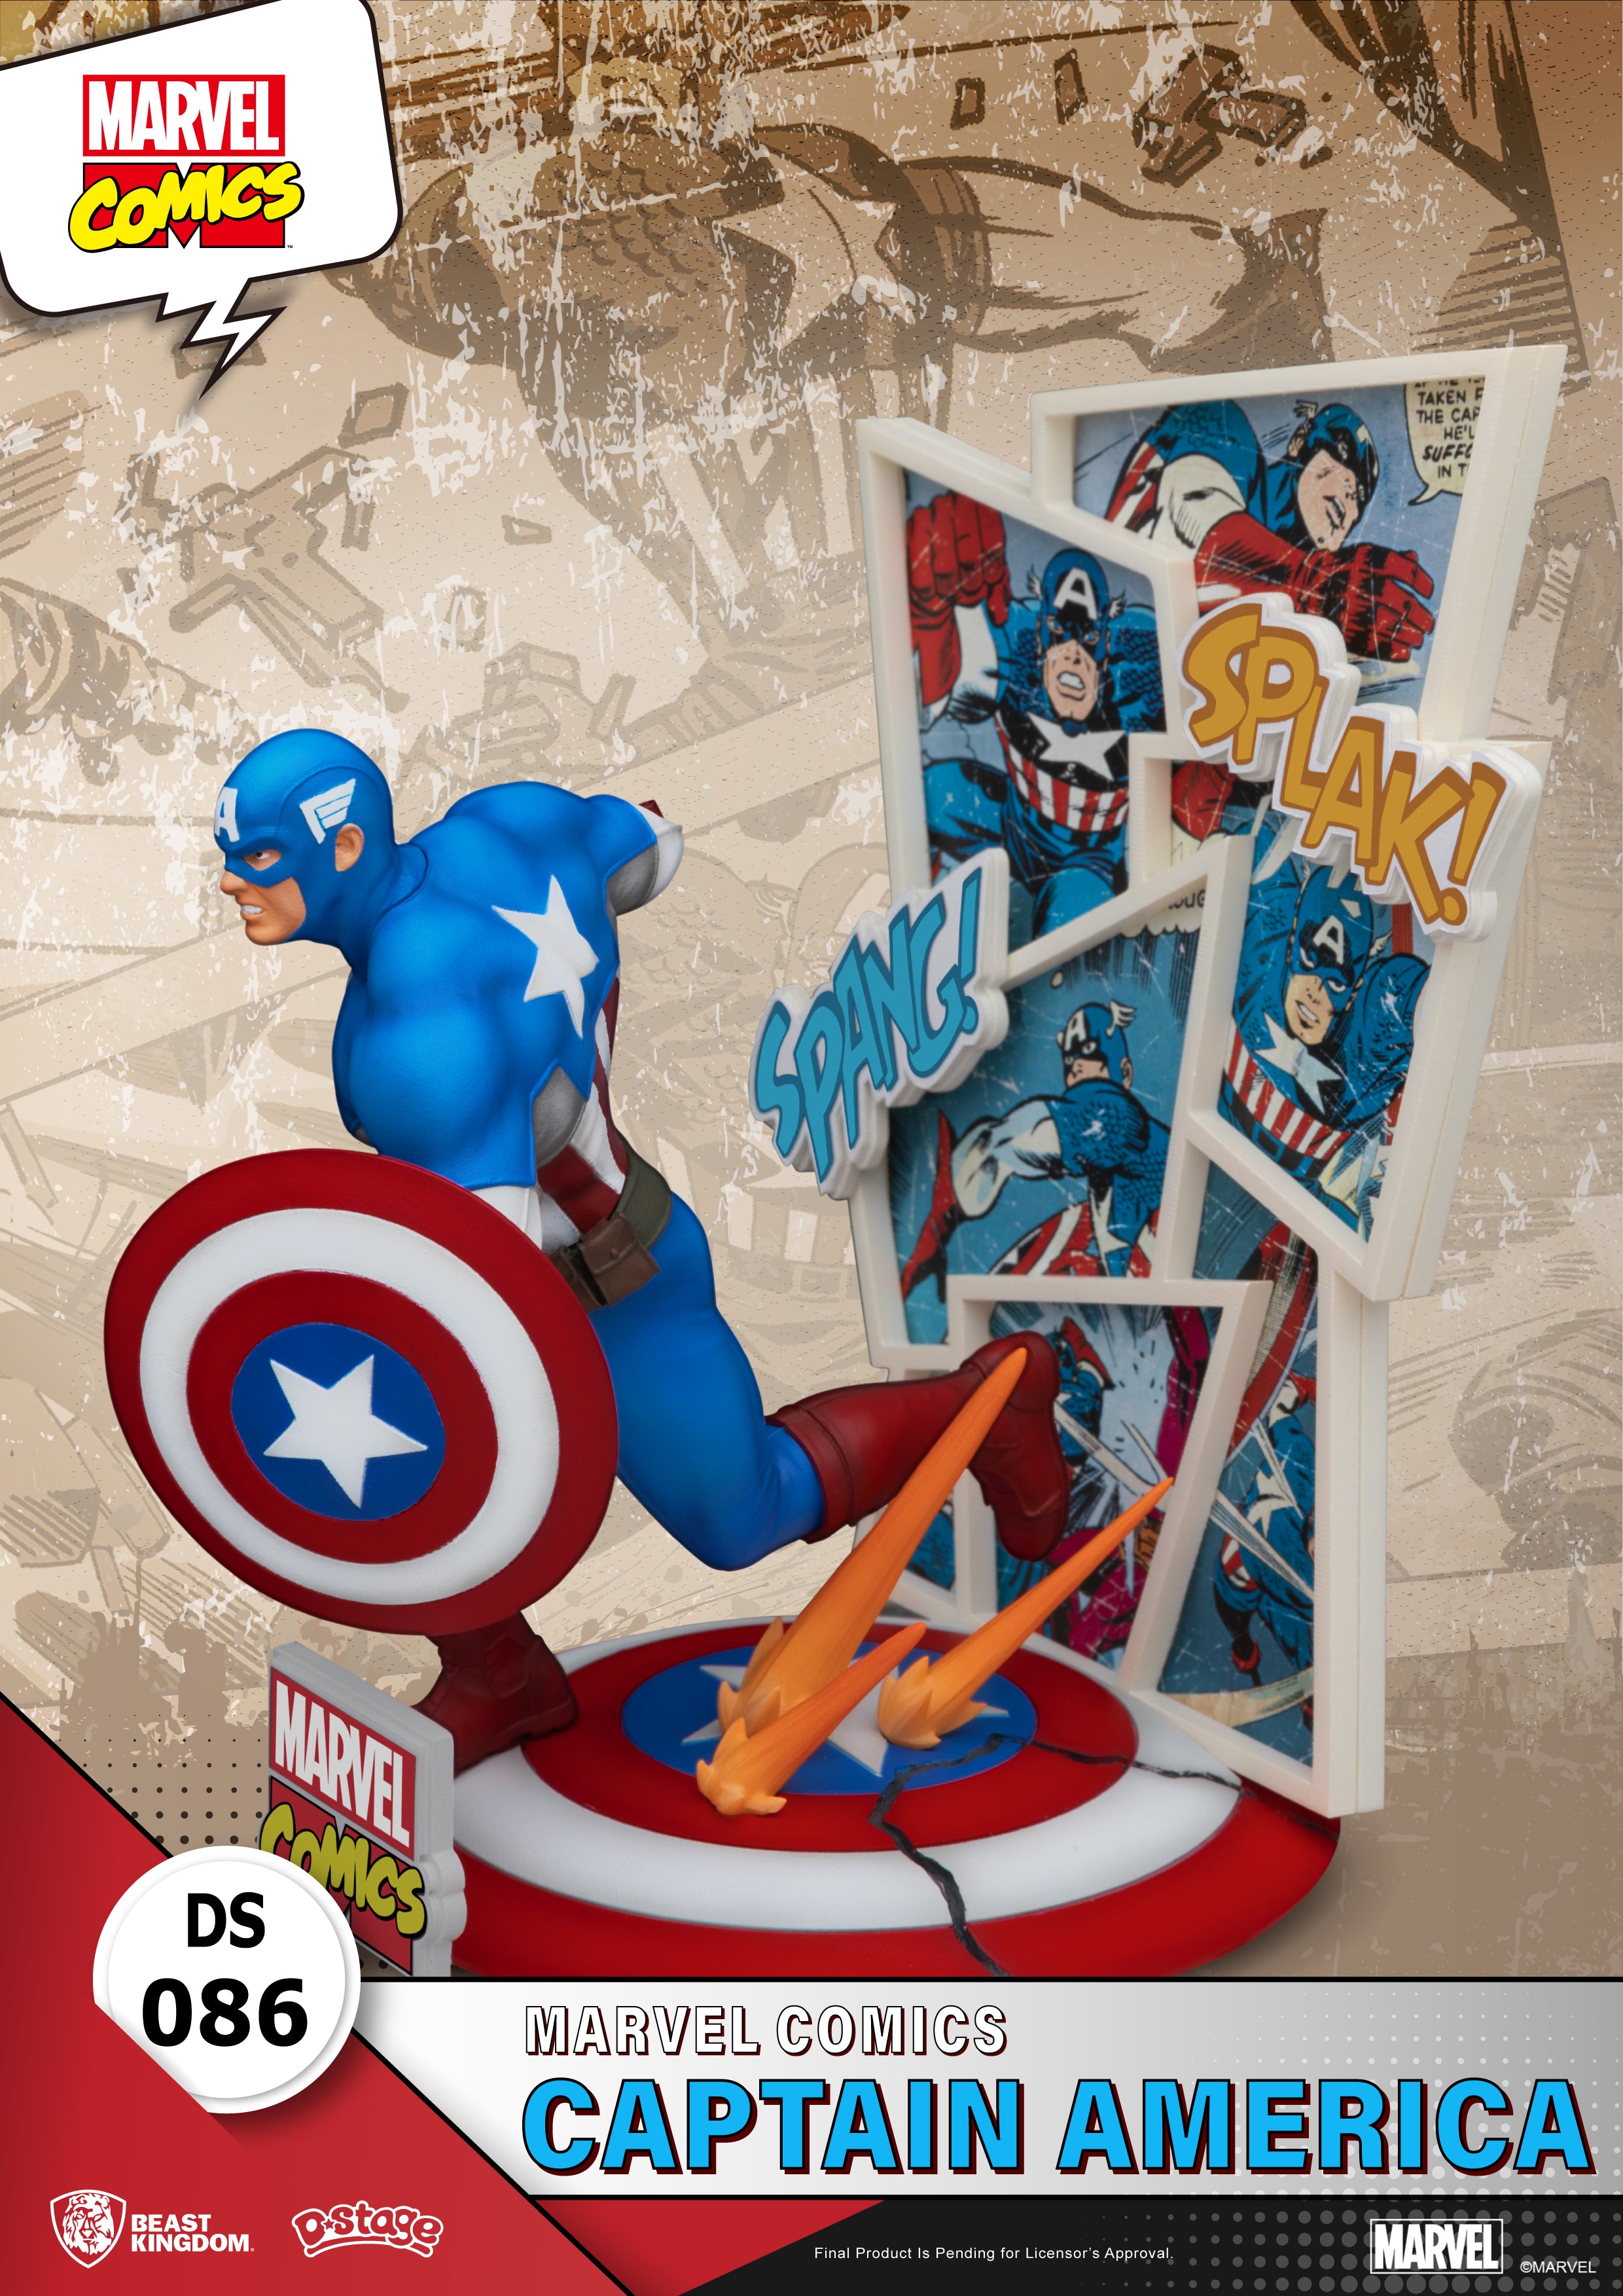 Beast Kingdom Diorama Stage: Marvel Comics - Capitan America DS-086